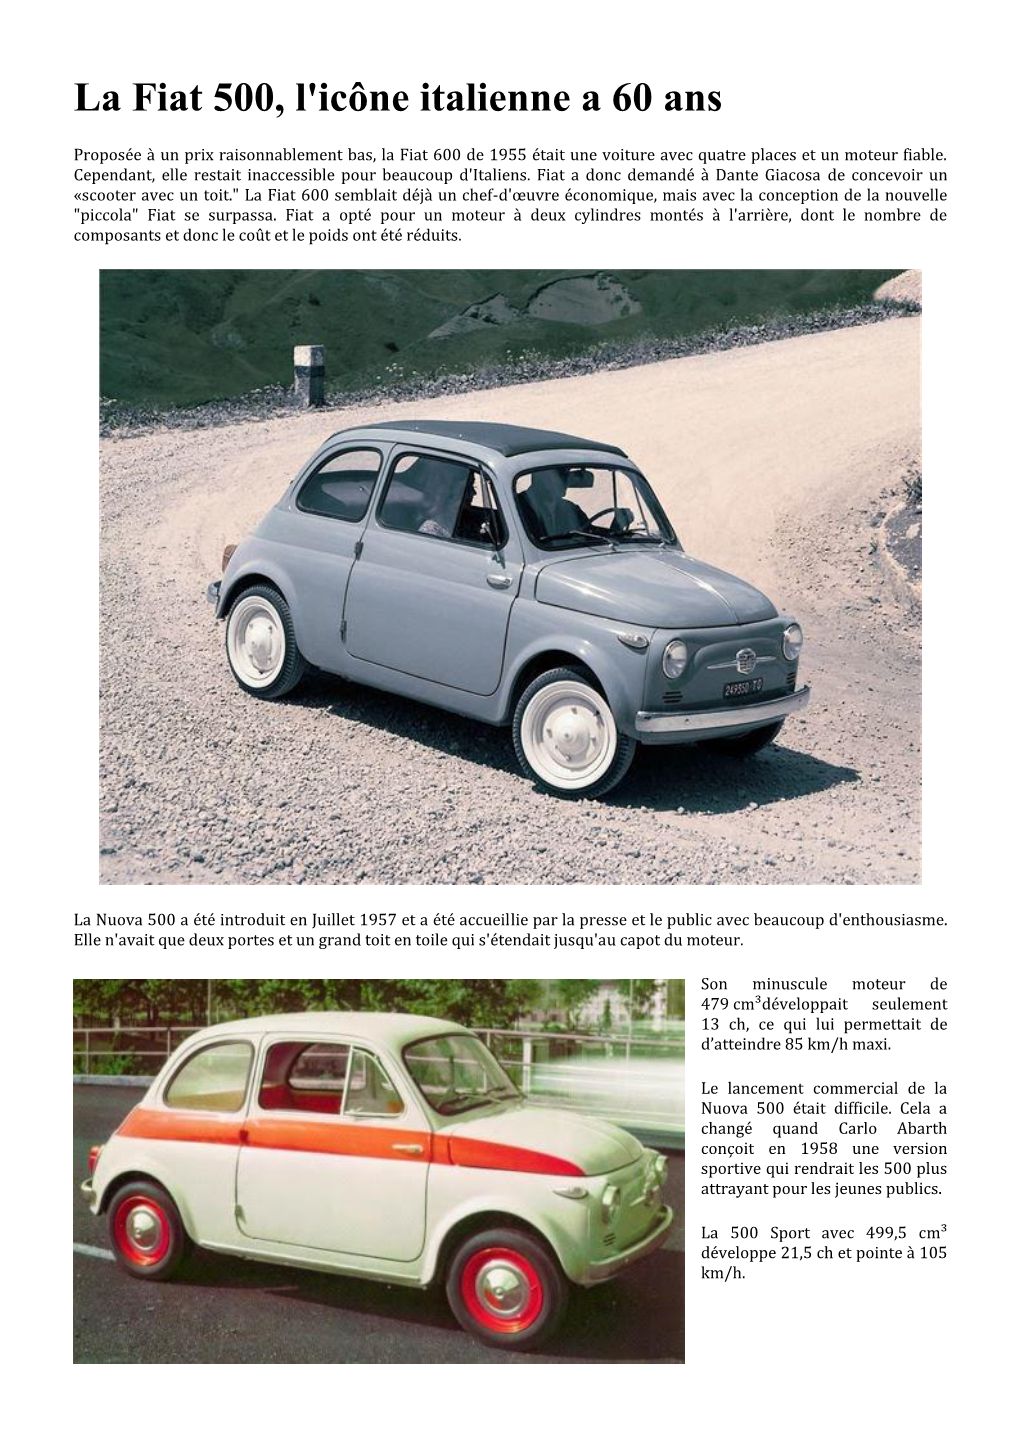 La Fiat 500, L'icône Italienne a 60 Ans